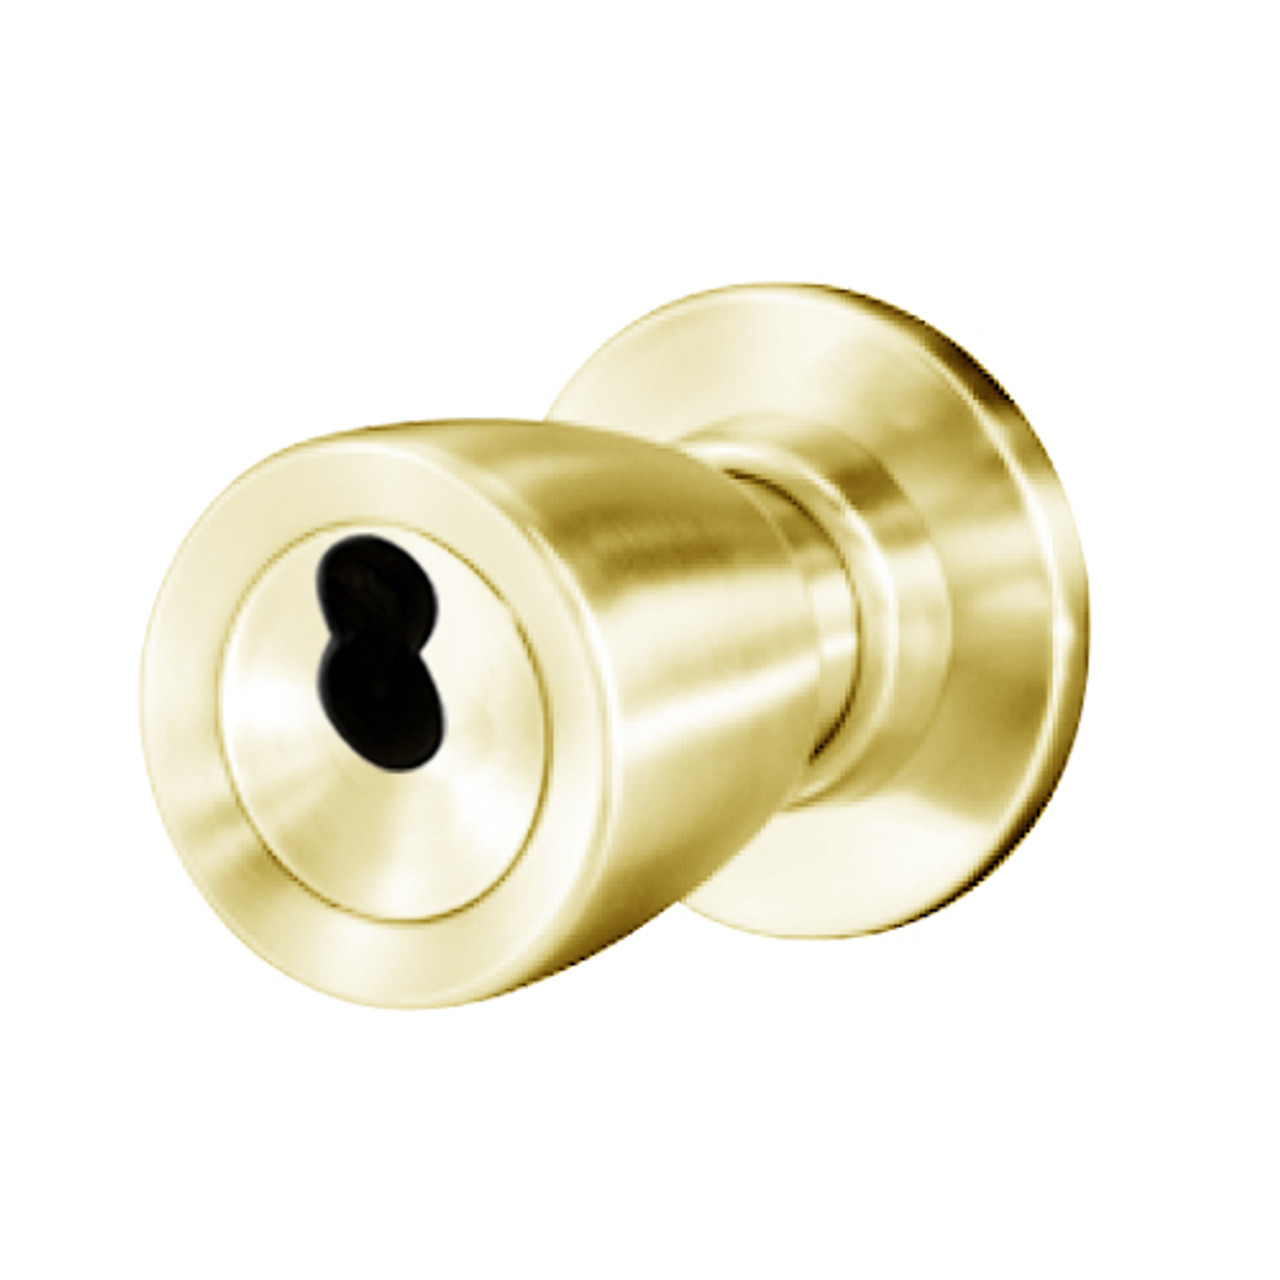 8K37YD6CS3605 Best 8K Series Exit Heavy Duty Cylindrical Knob Locks with Tulip Style in Bright Brass